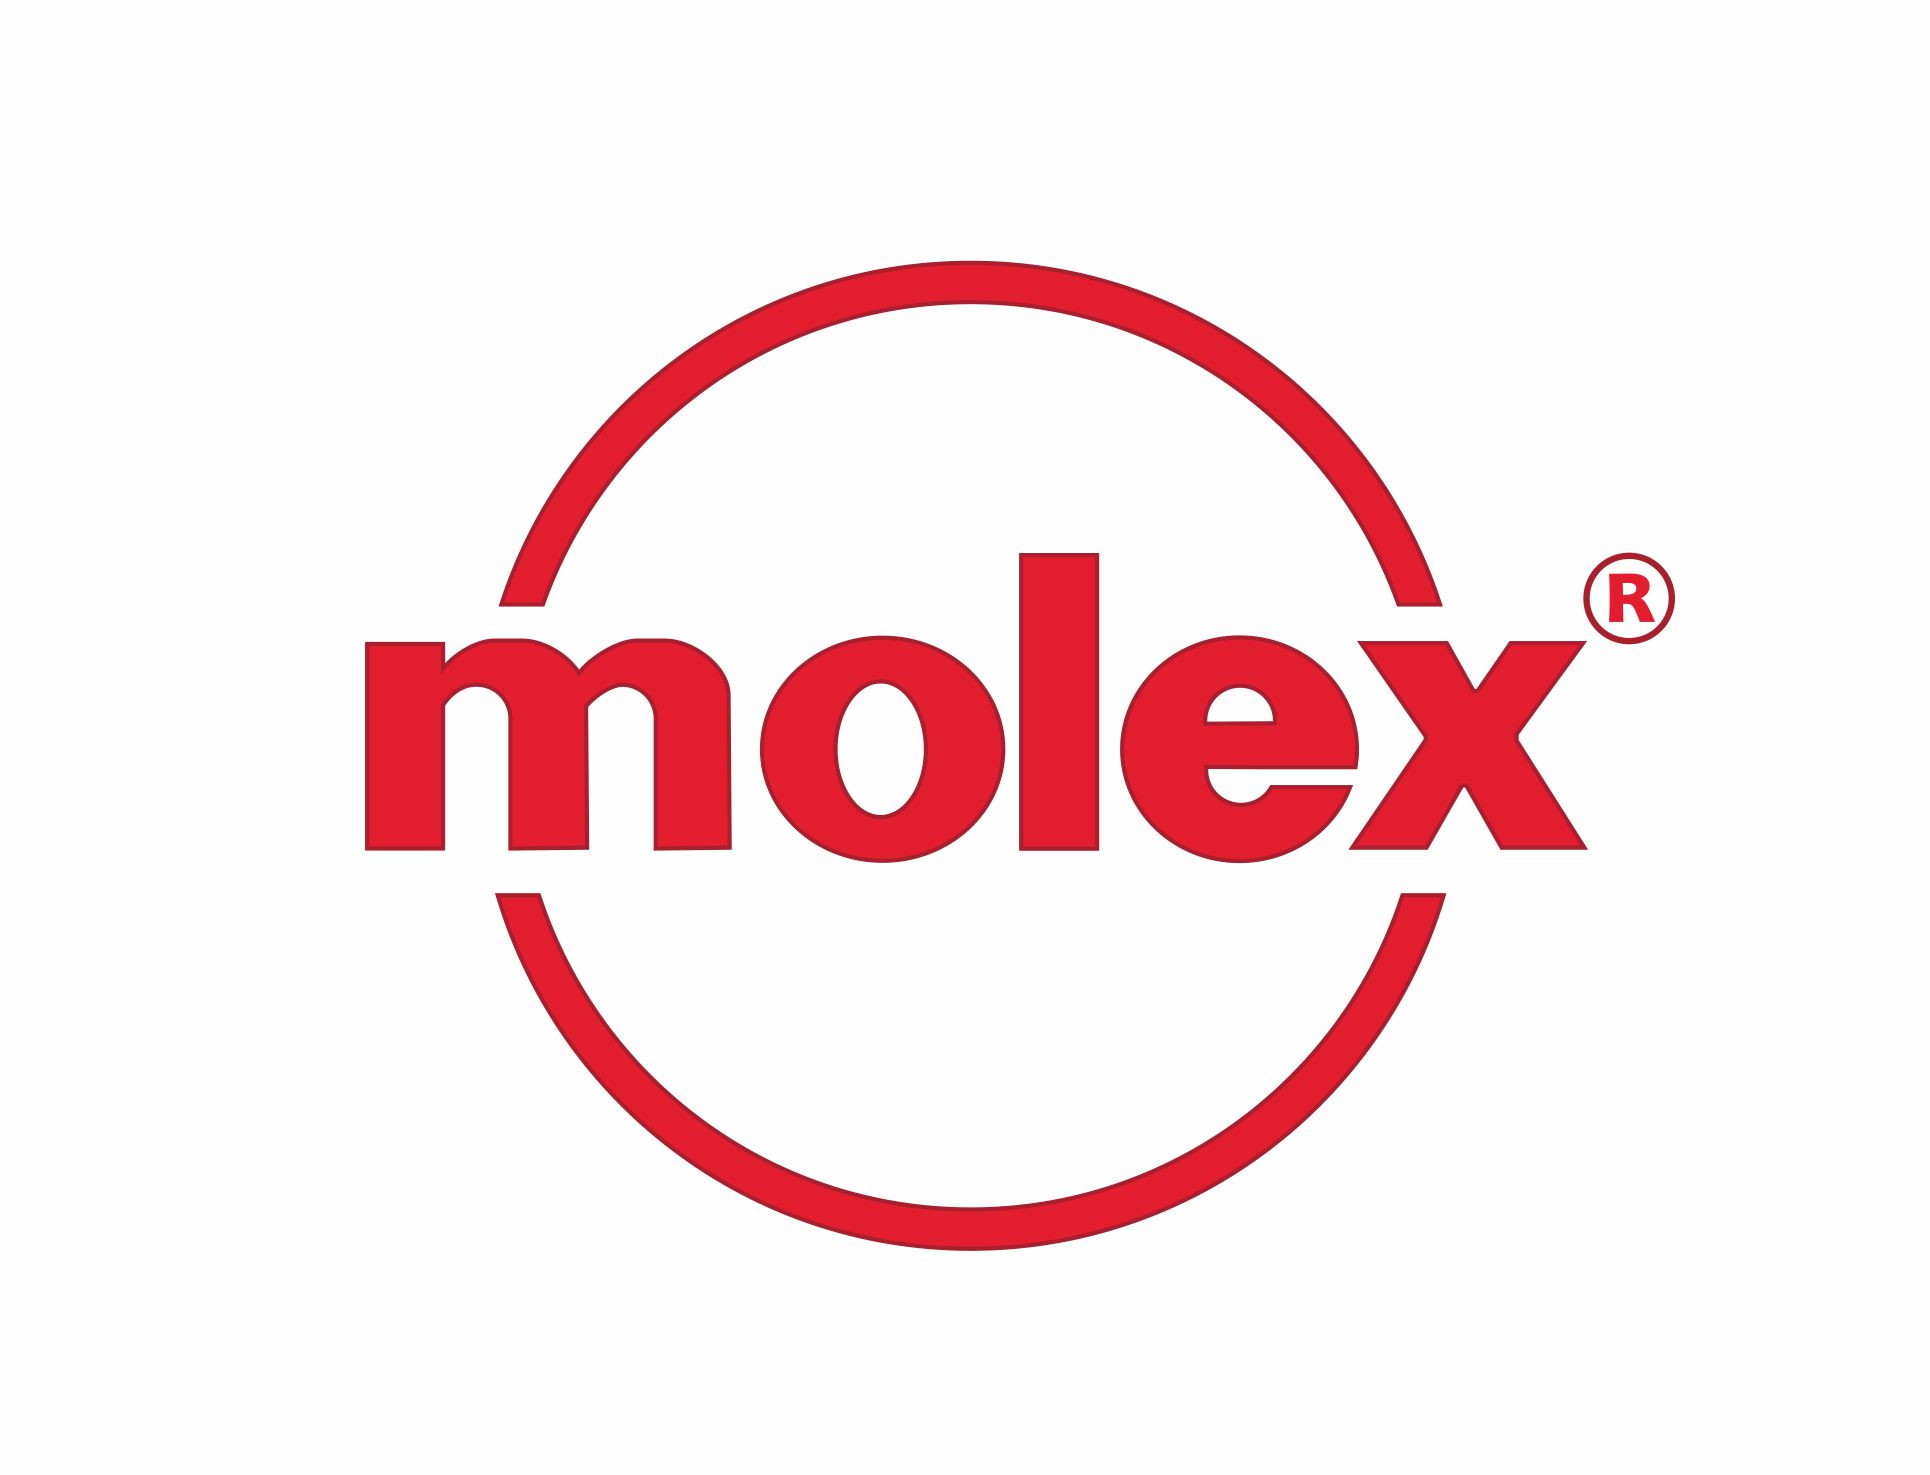 MOLEX Stock